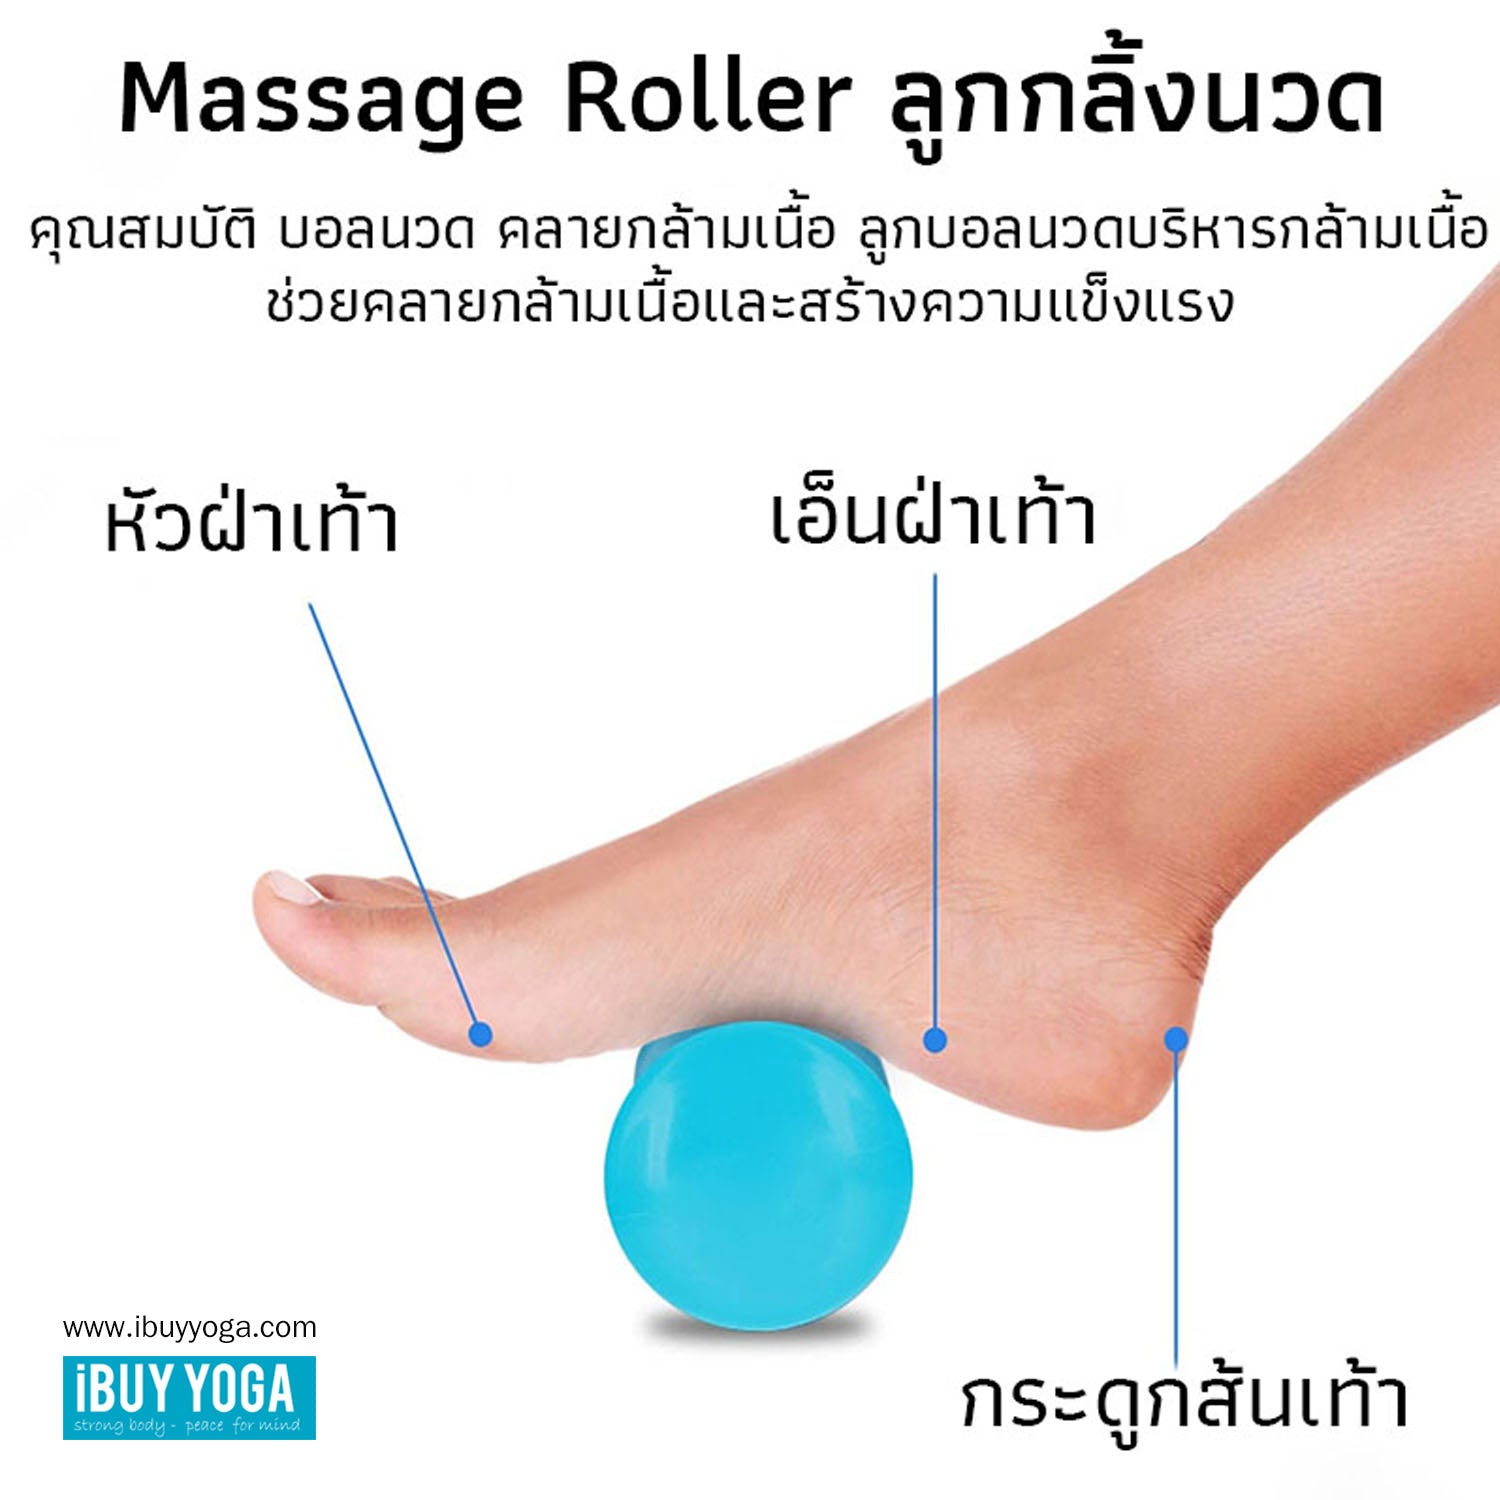 Foot Massage Roller ลูกกลิ้งนวดเท้า